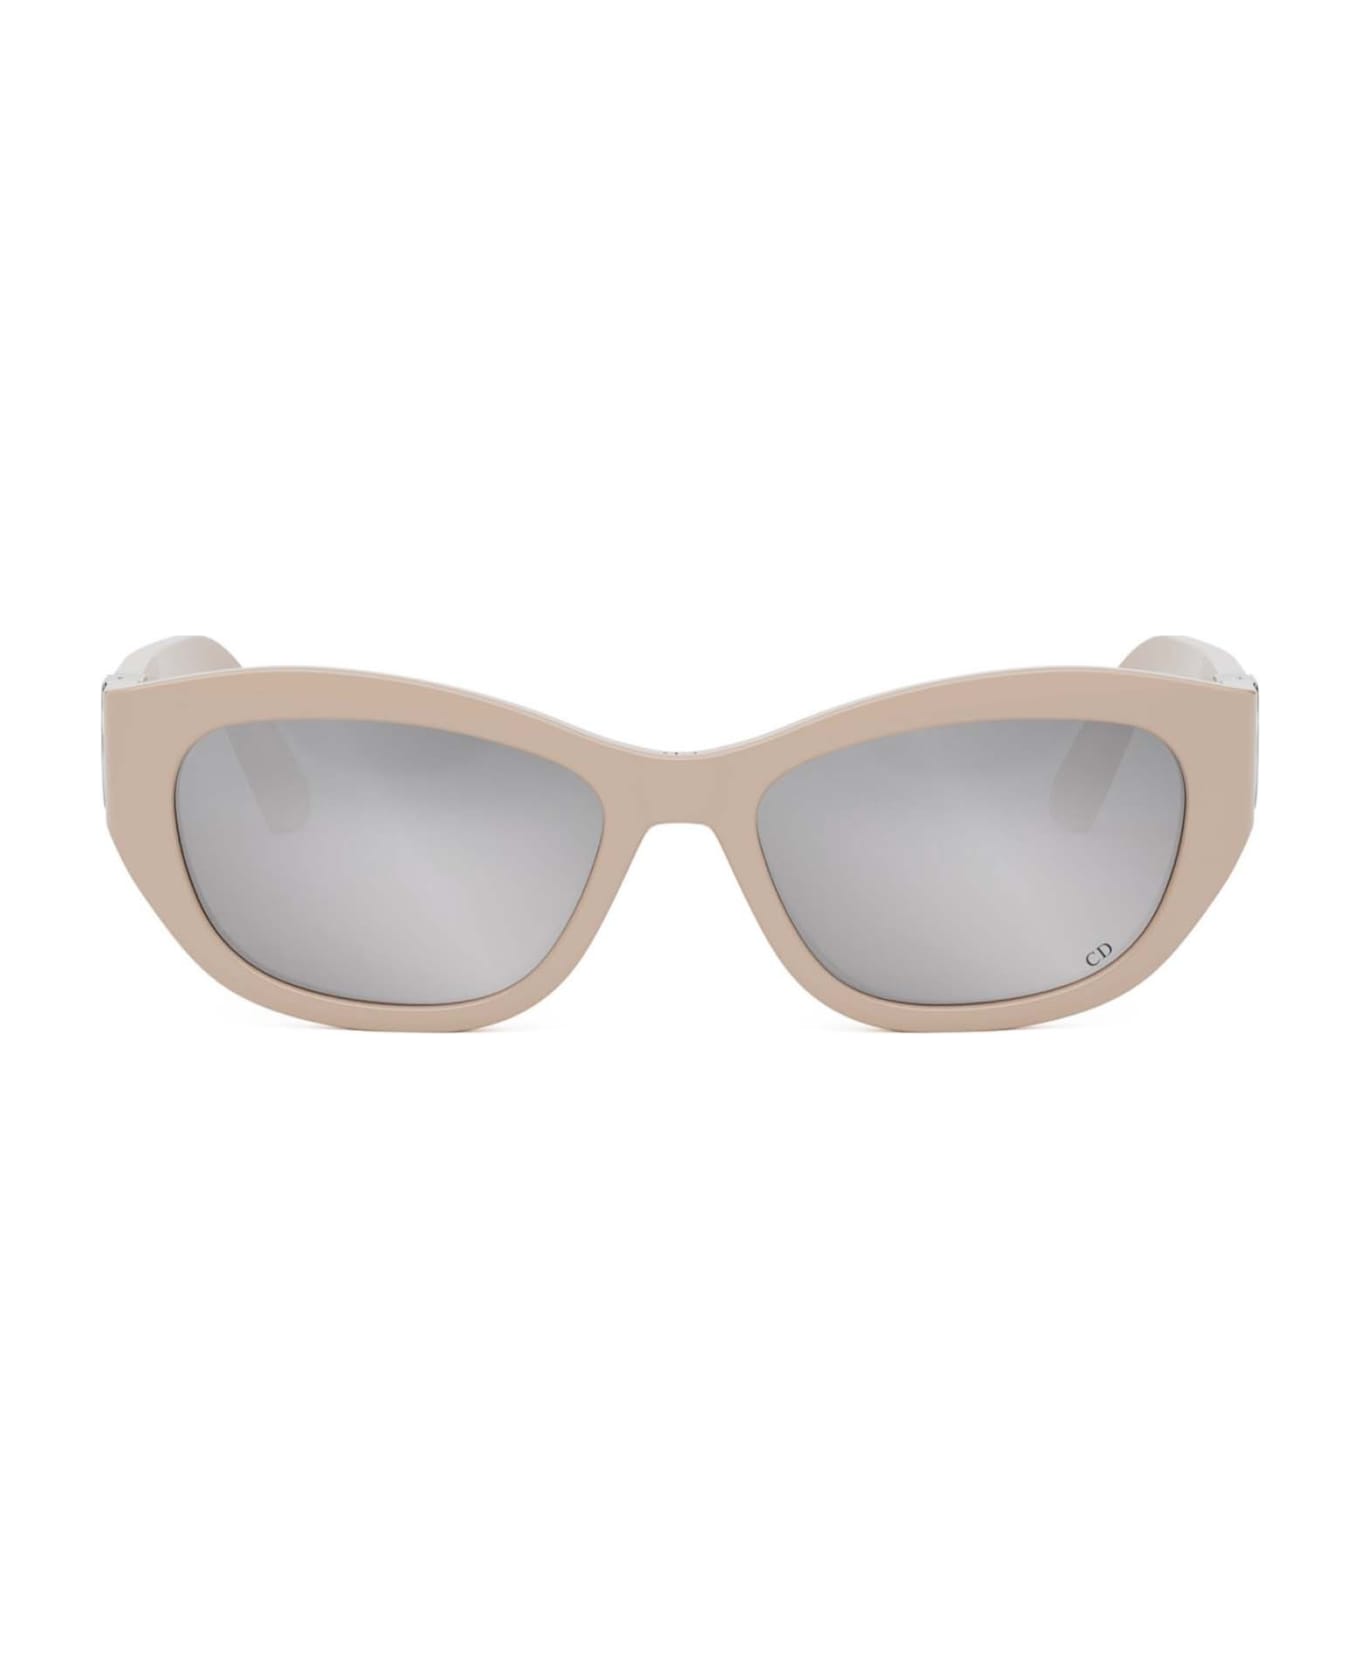 Dior Eyewear Sunglasses - Cipria/Silver